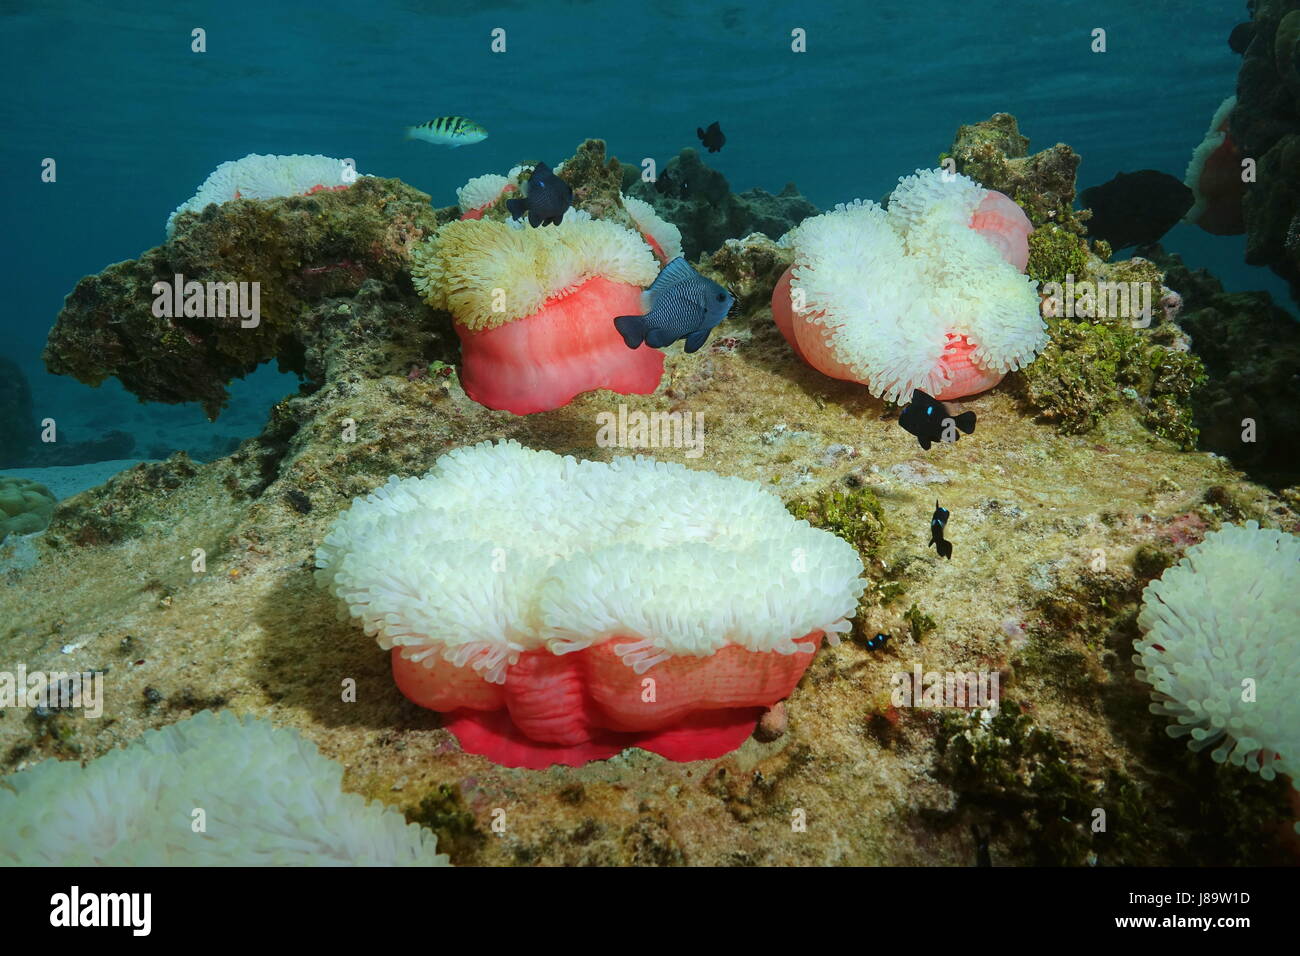 Underwater marine life, colorful sea anemones Heteractis magnifica with damselfish, Pacific ocean, Tahiti, French Polynesia Stock Photo